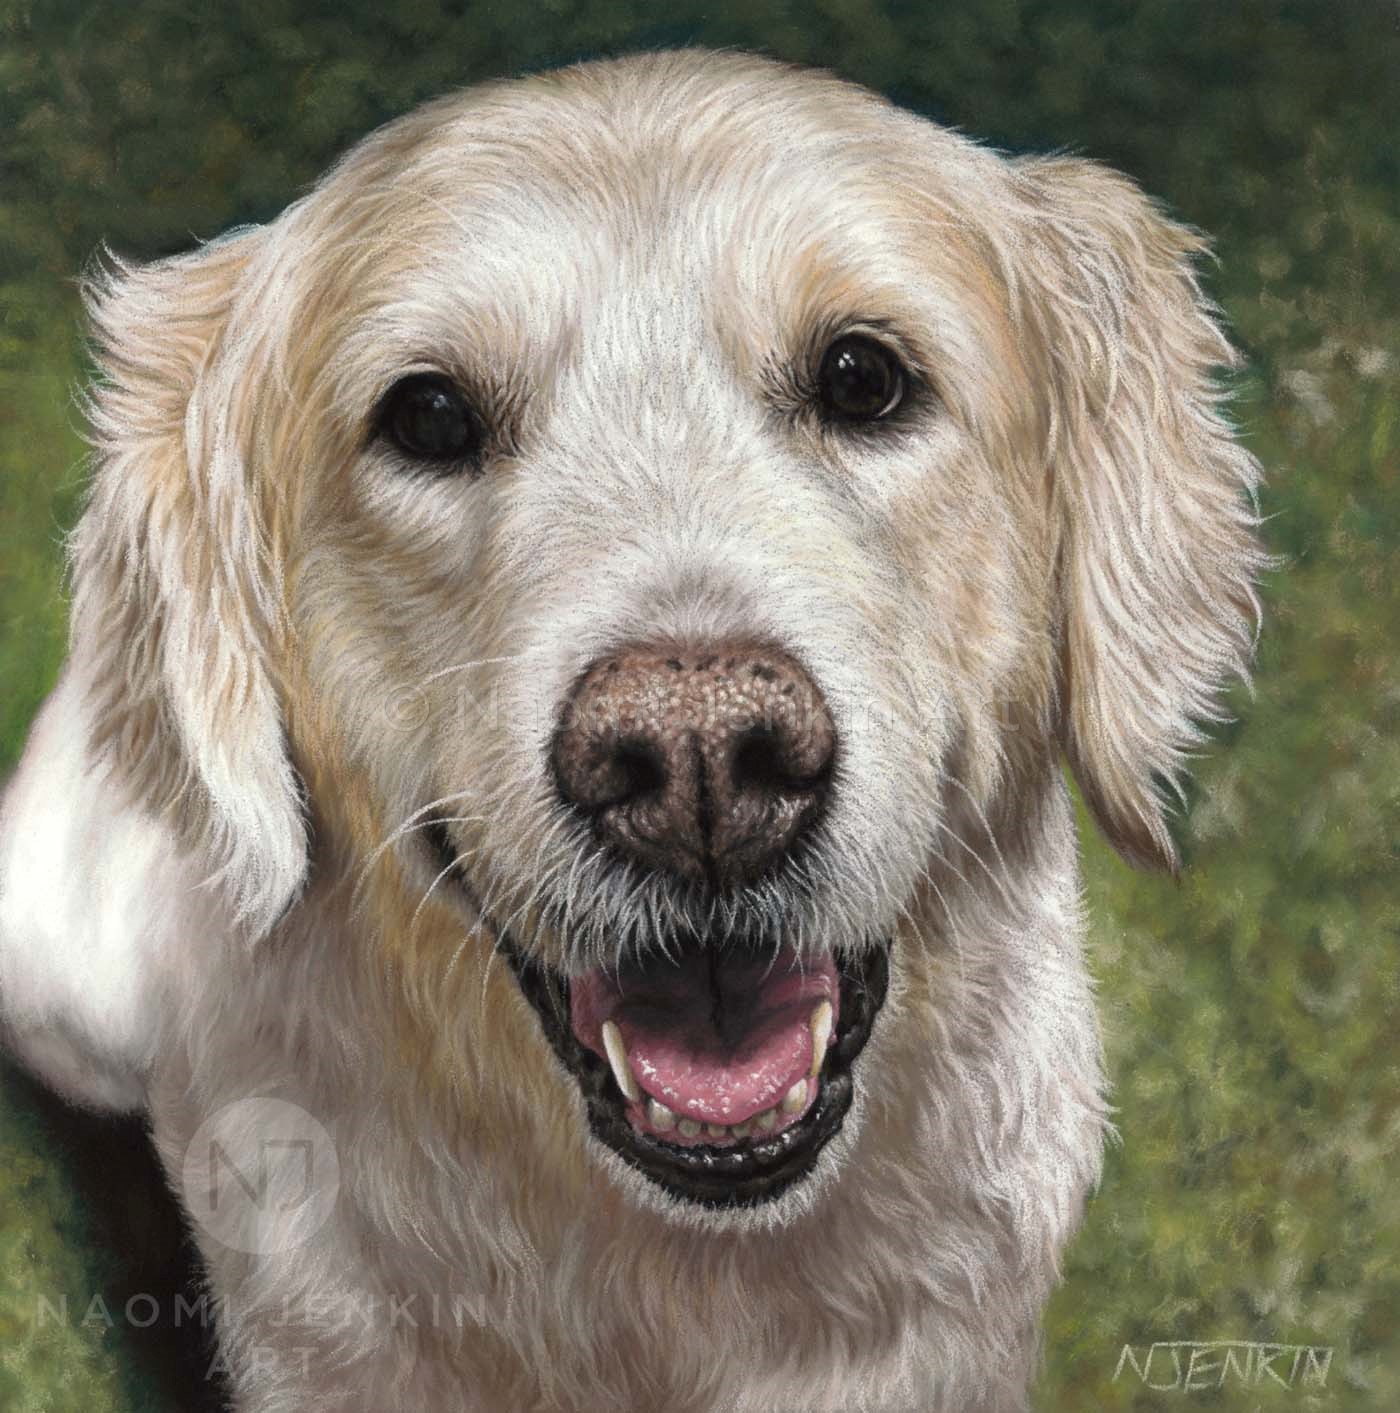 Golden retriever portrait by dog portrait artist Naomi Jenkin. 